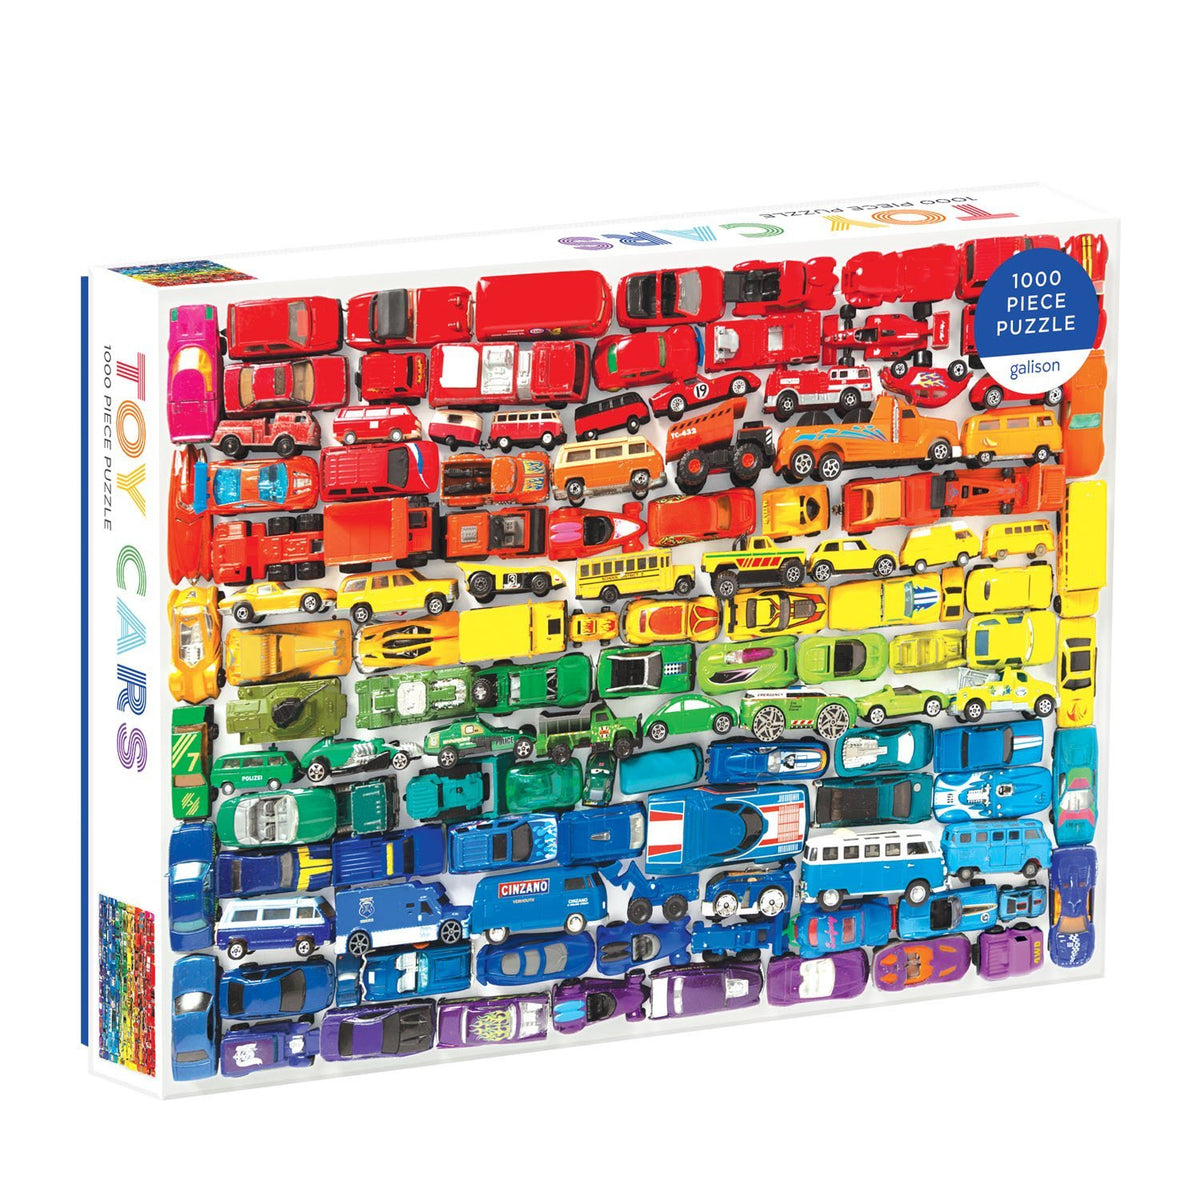 Rainbow Toy Cars 1000 Piece Puzzle 1000 Piece Puzzles Galison 